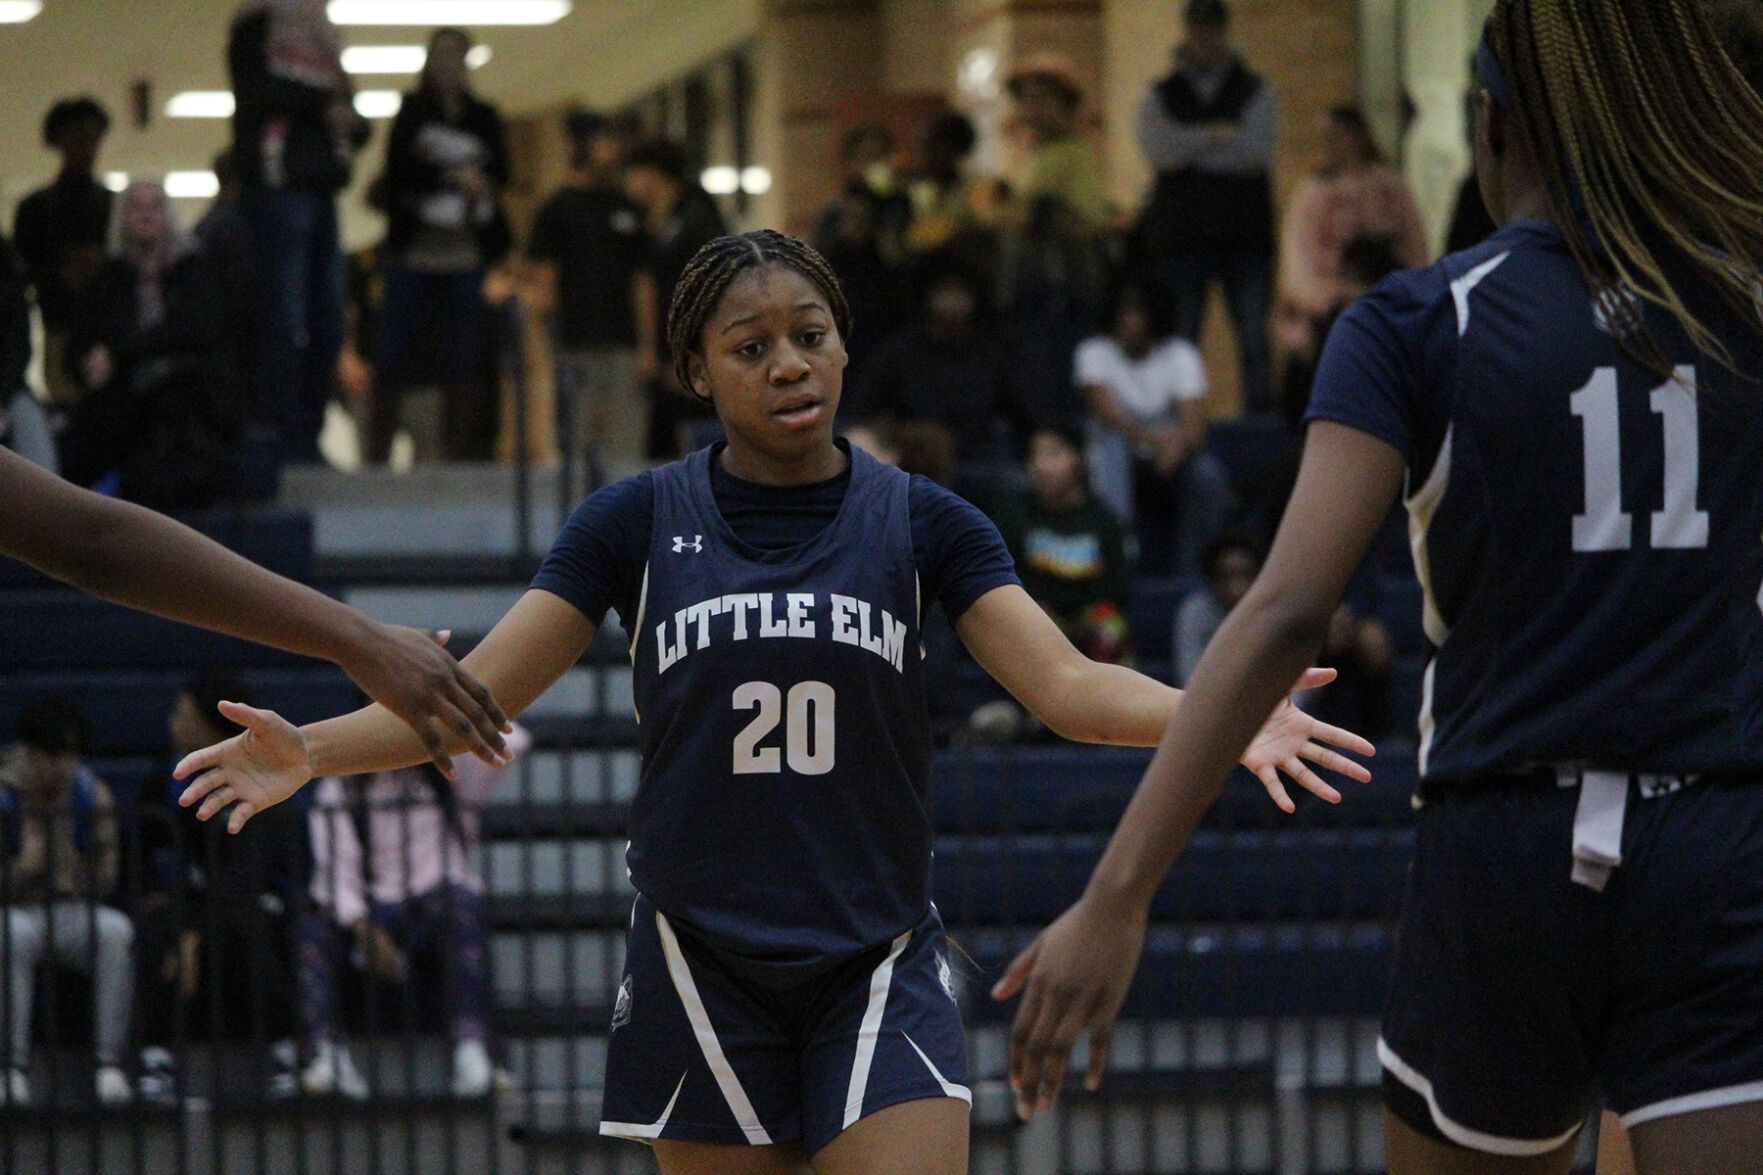 Little Elm Girls Basketball Team Upsets Allen in State-Ranked Showcase